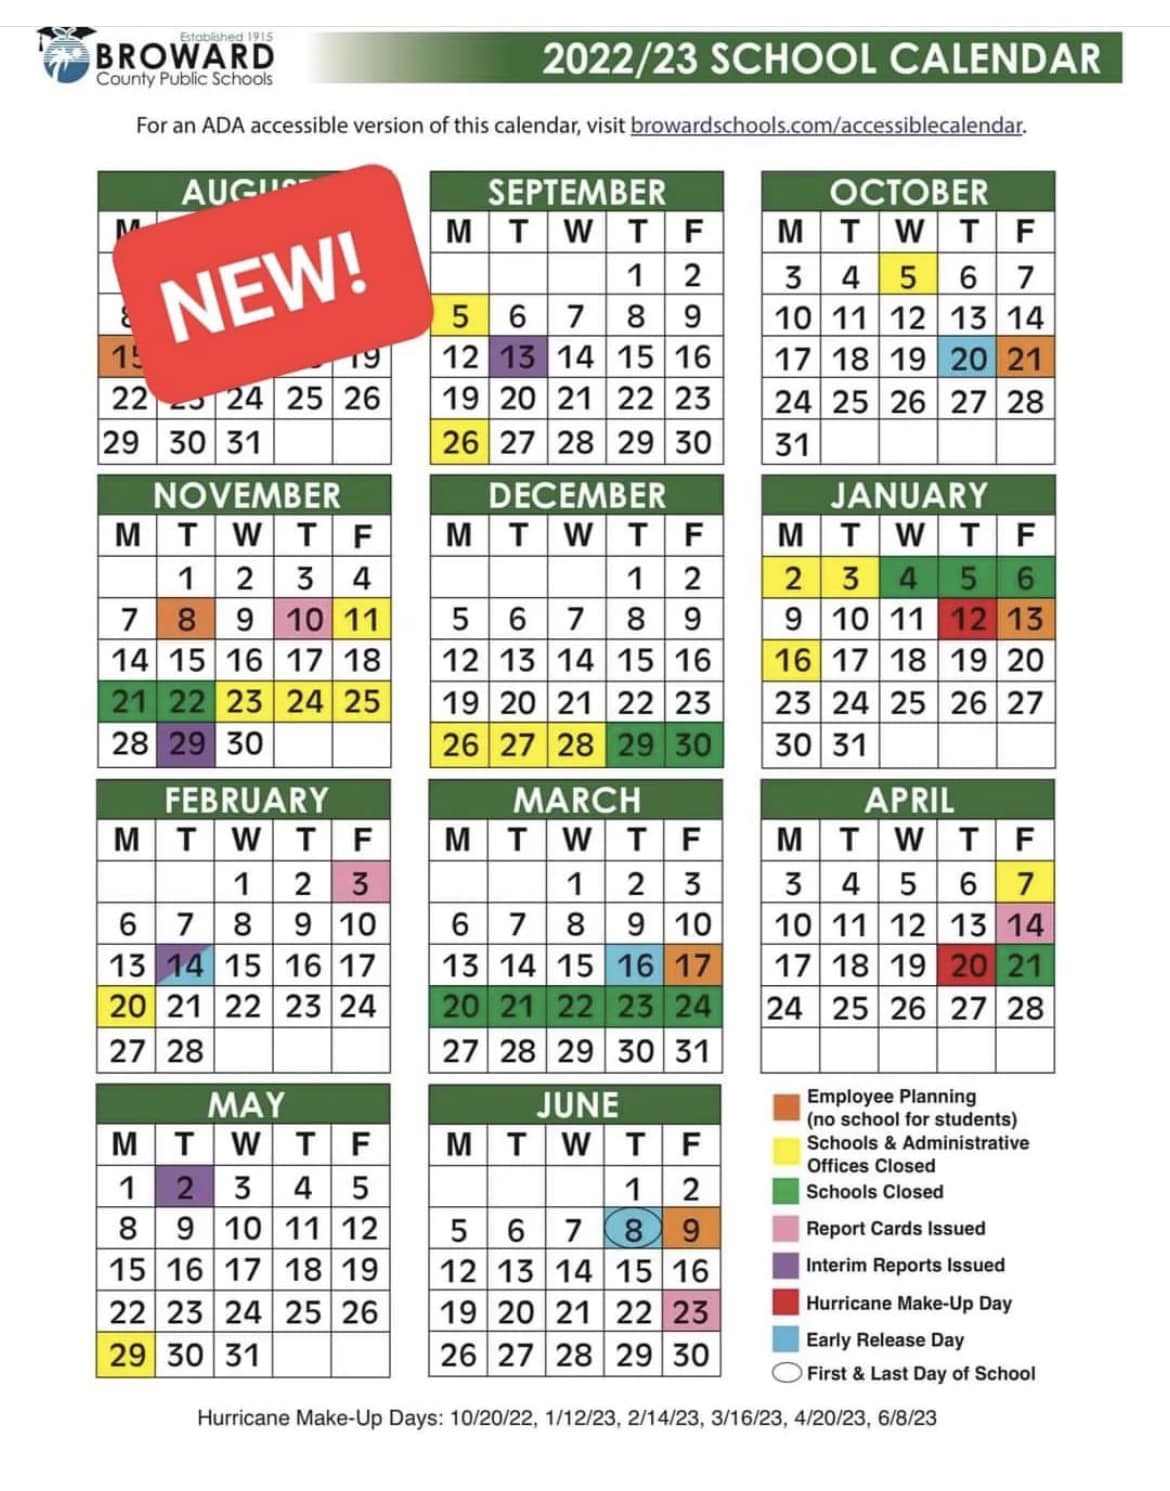 Official 2022/23 Broward County Public Schools Color Calendar - UPDATED